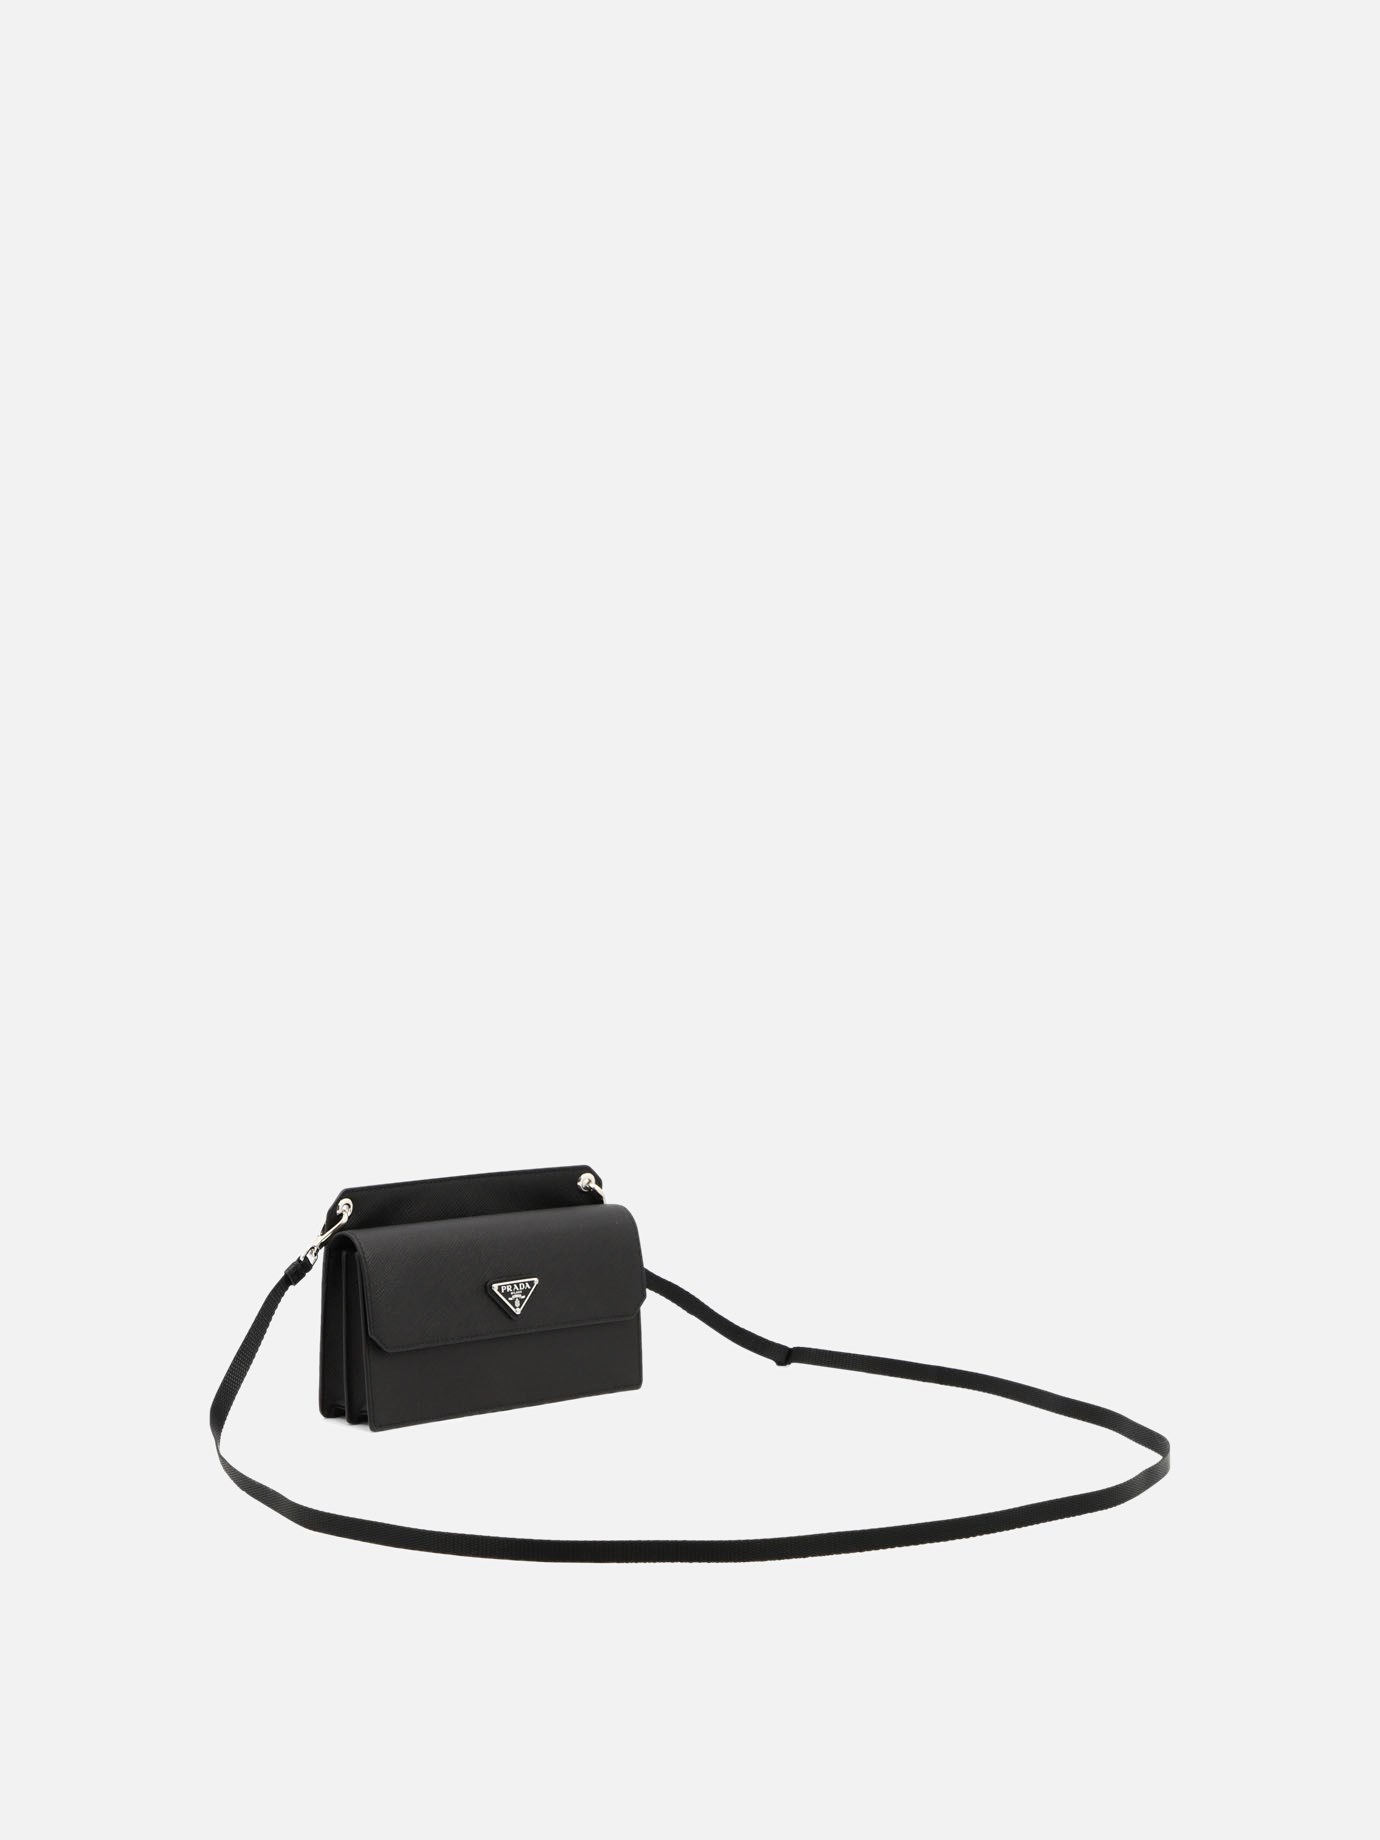 Saffiano leather smartphone case by Prada